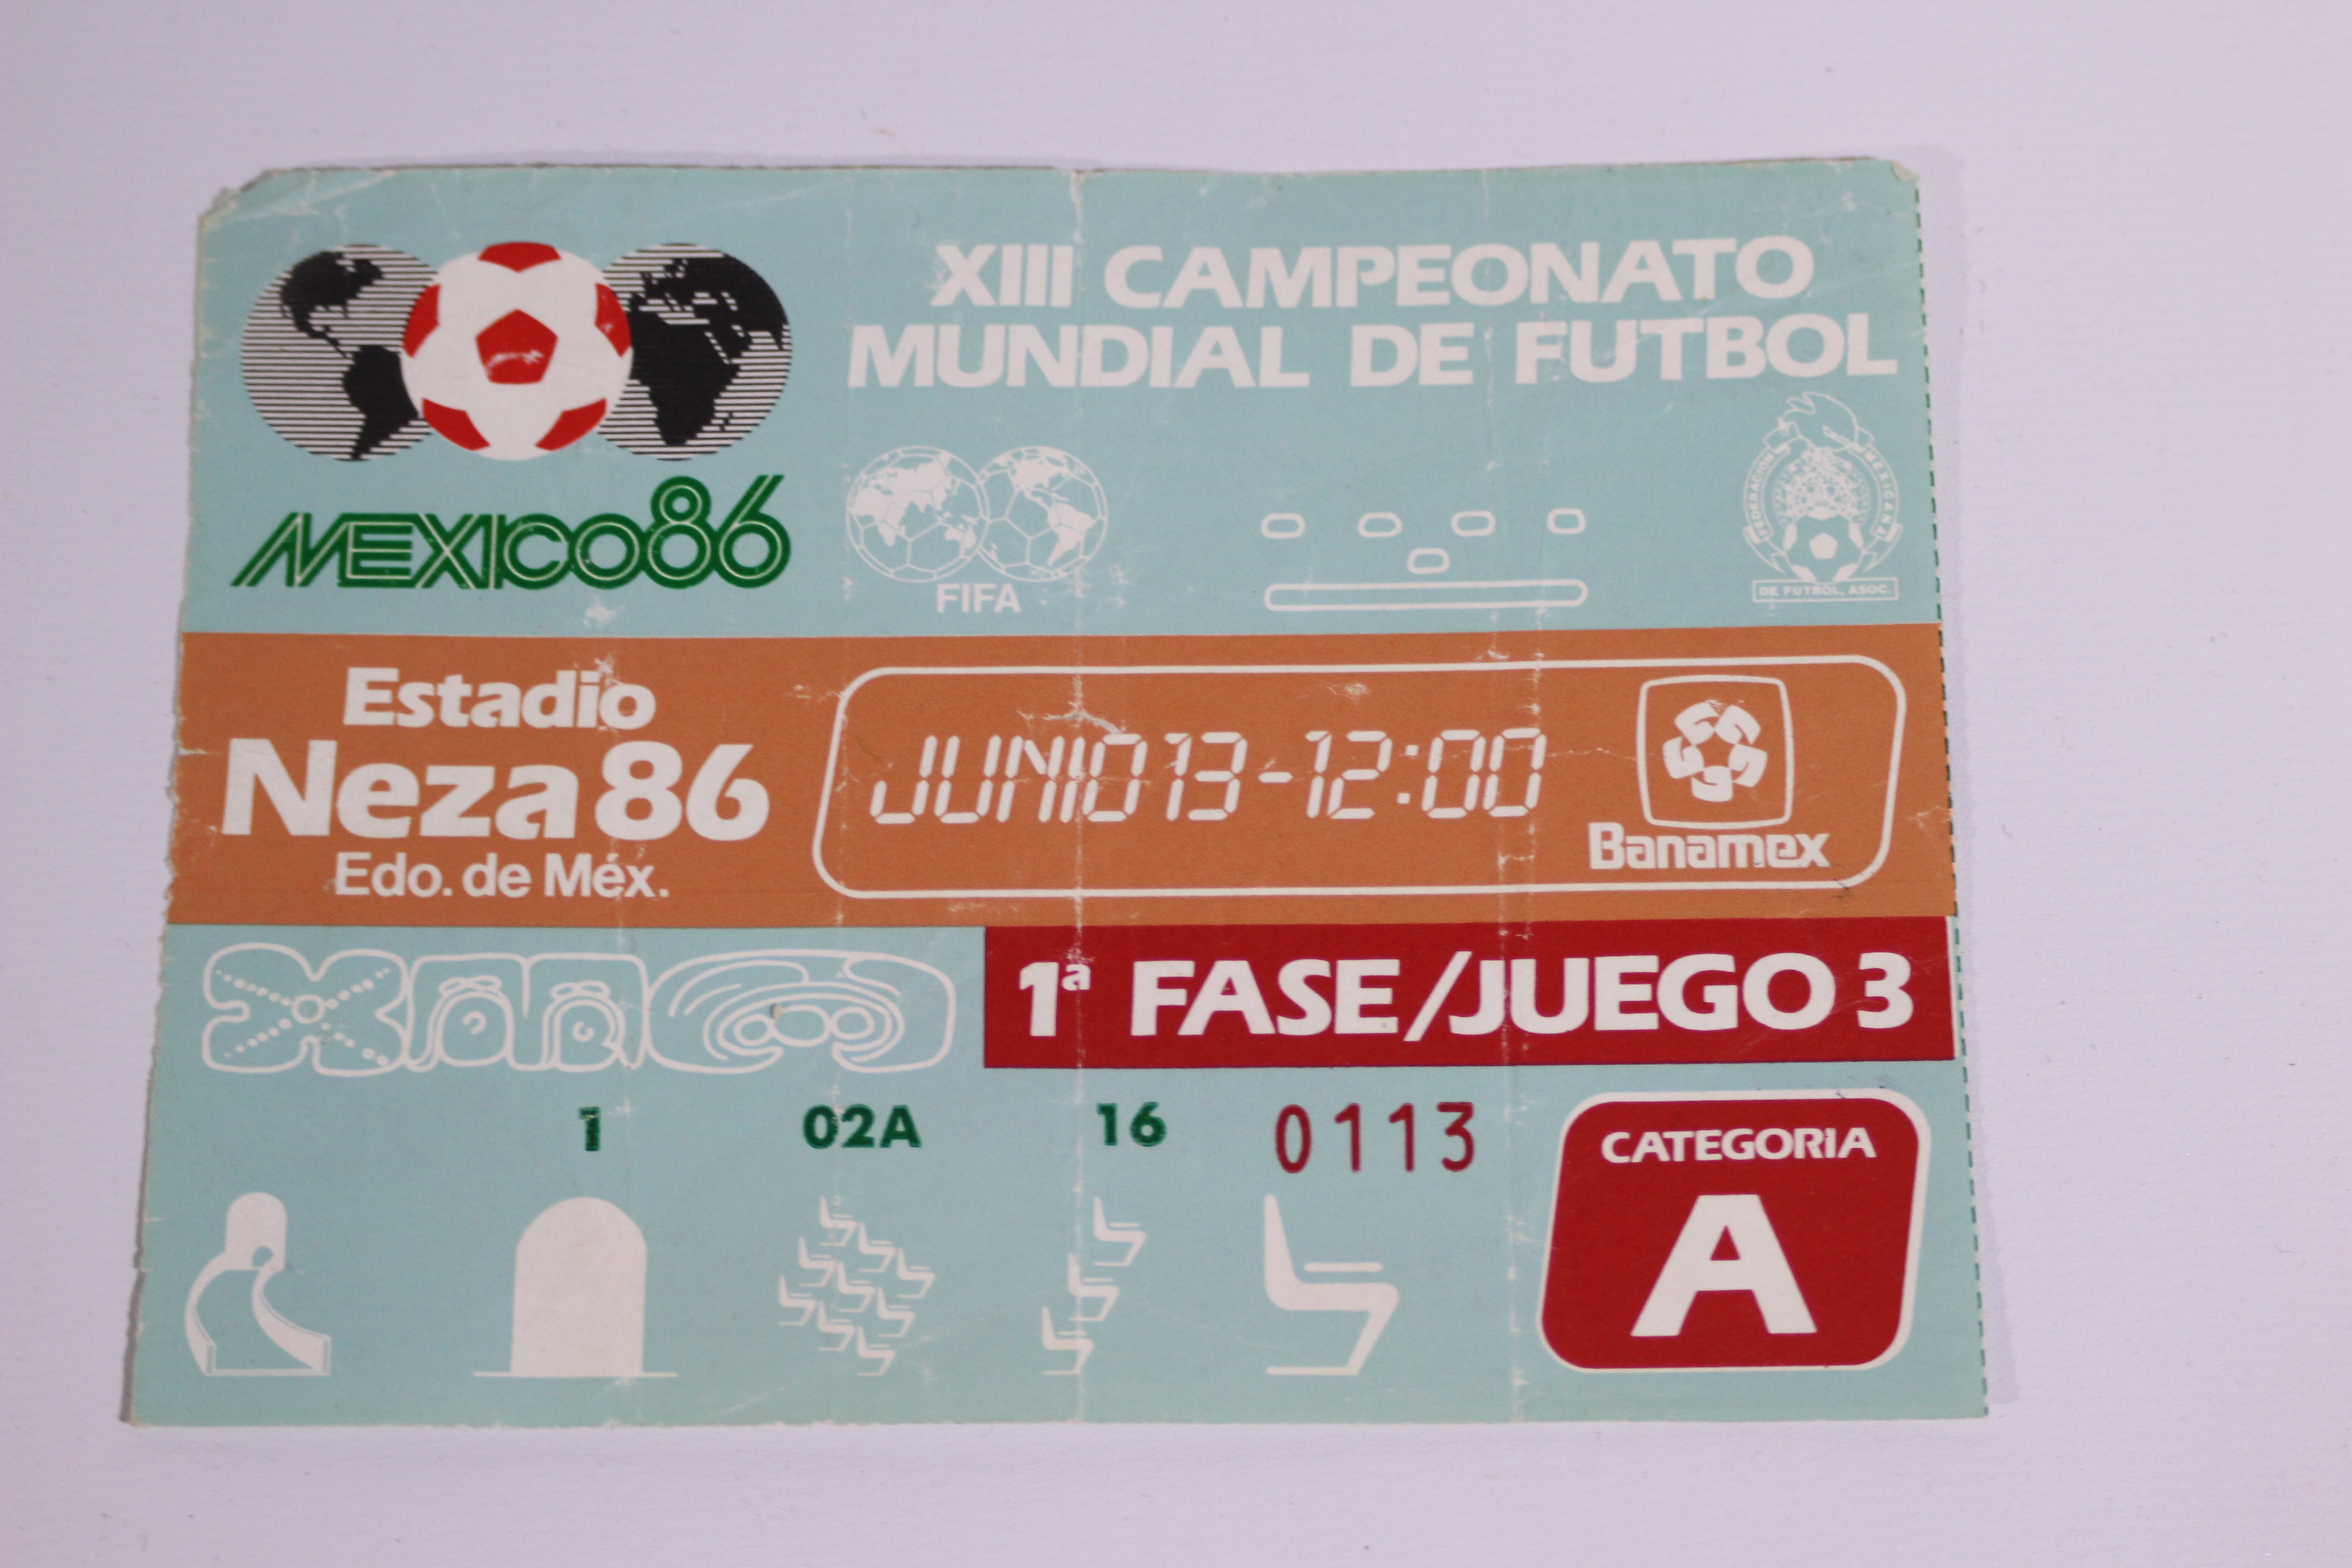 World Cup Football Ticket, Mexico 86 Sco